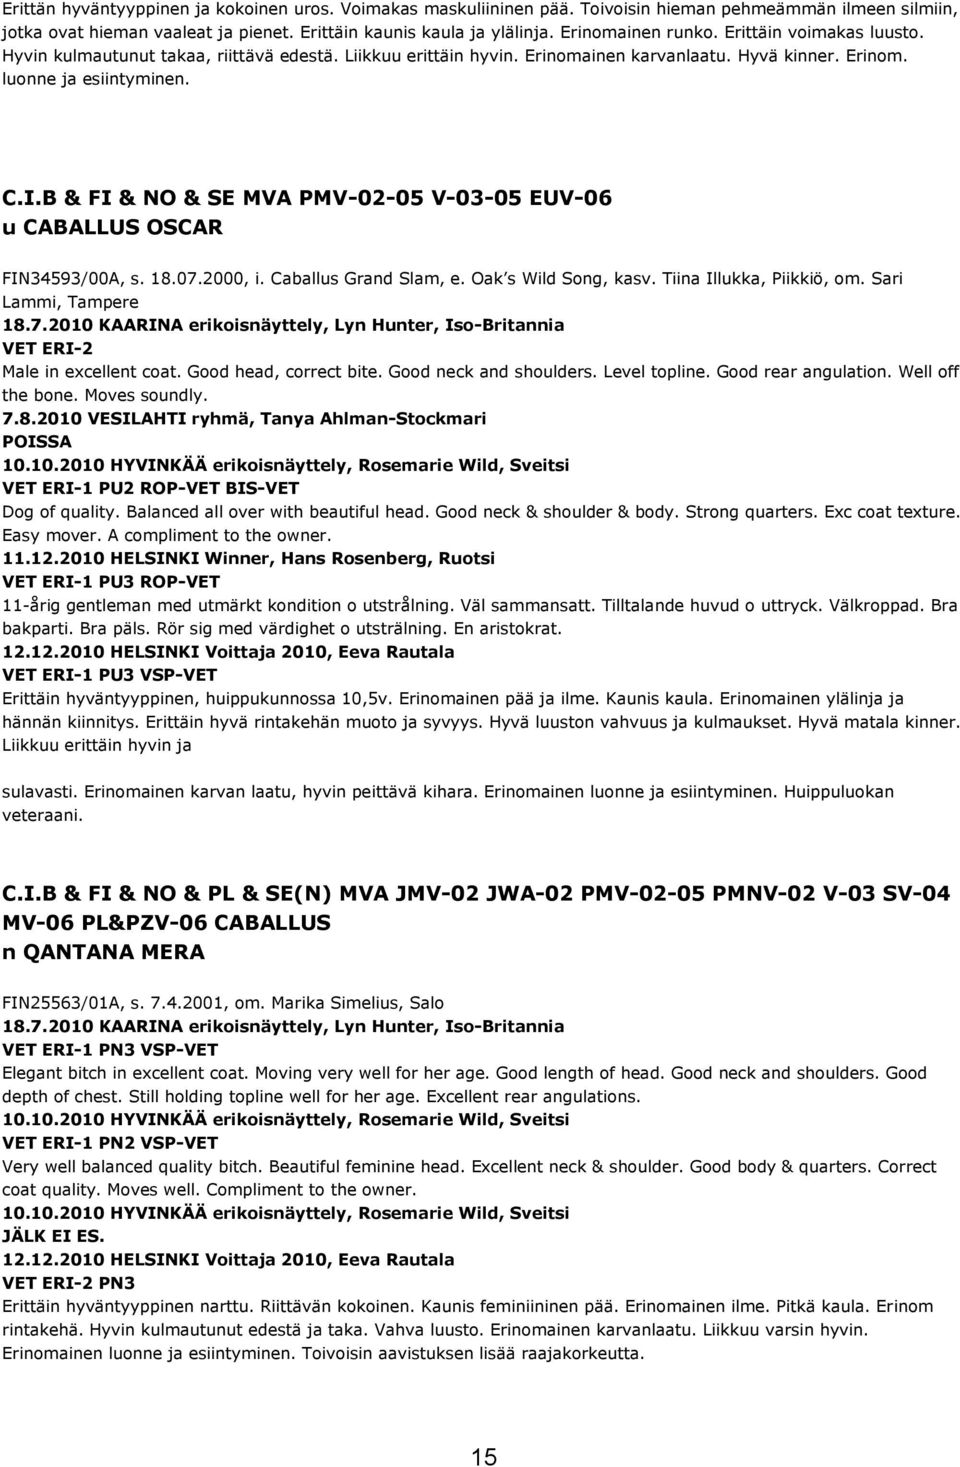 B & FI & NO & SE MVA PMV-02-05 V-03-05 EUV-06 u CABALLUS OSCAR FIN34593/00A, s. 18.07.2000, i. Caballus Grand Slam, e. Oak s Wild Song, kasv. Tiina Illukka, Piikkiö, om.